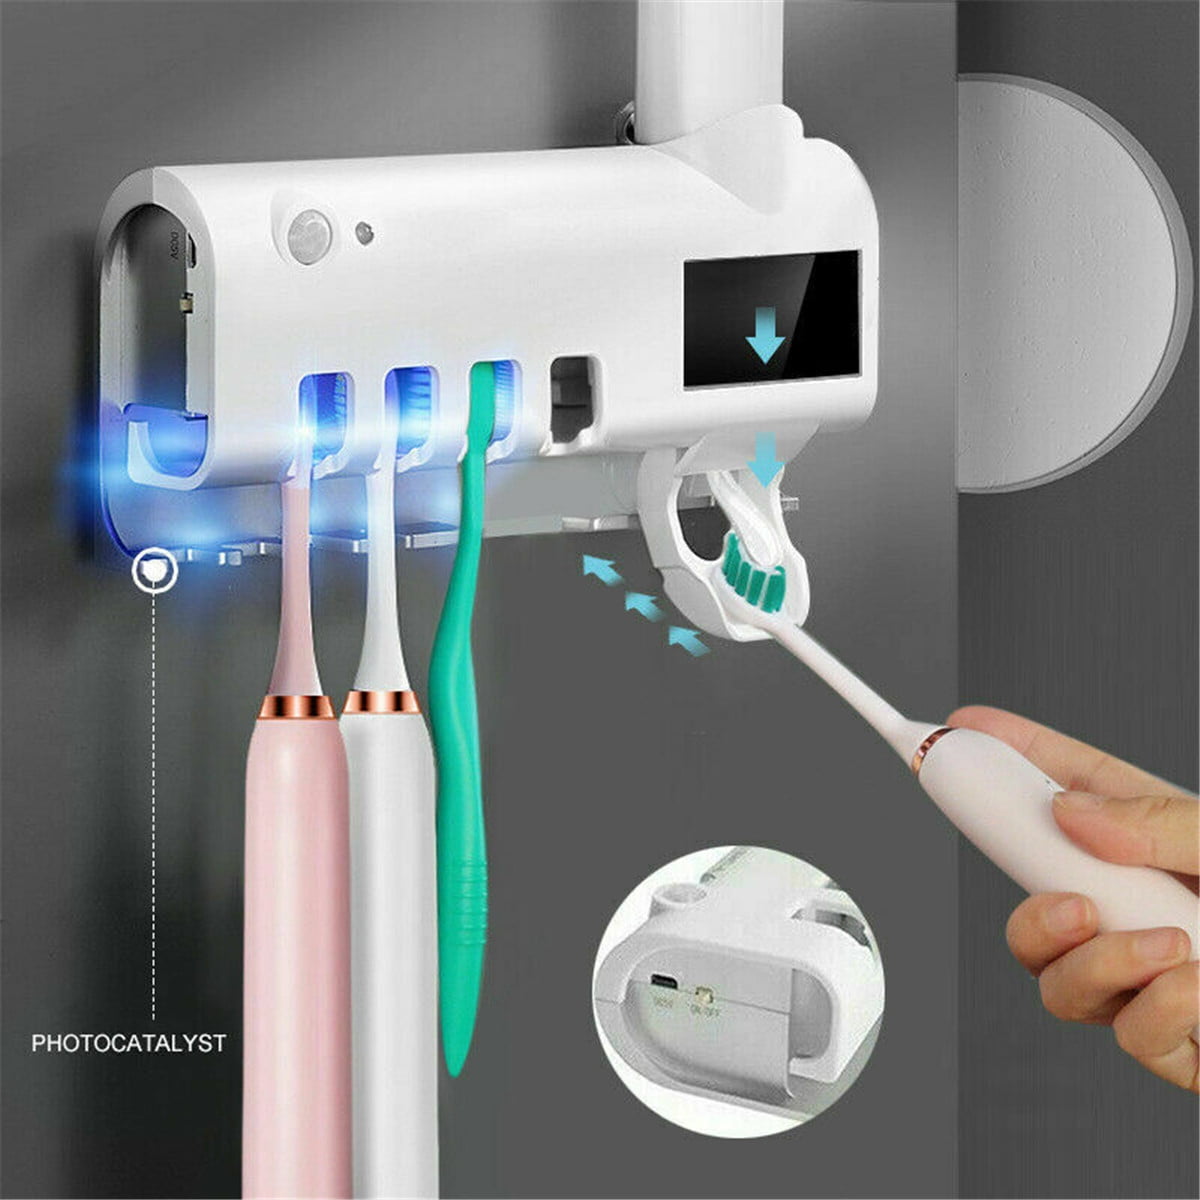 Light Toothbrush Holder Set Cleaner Wall Mount Bathroom Toothpaste Dispenser